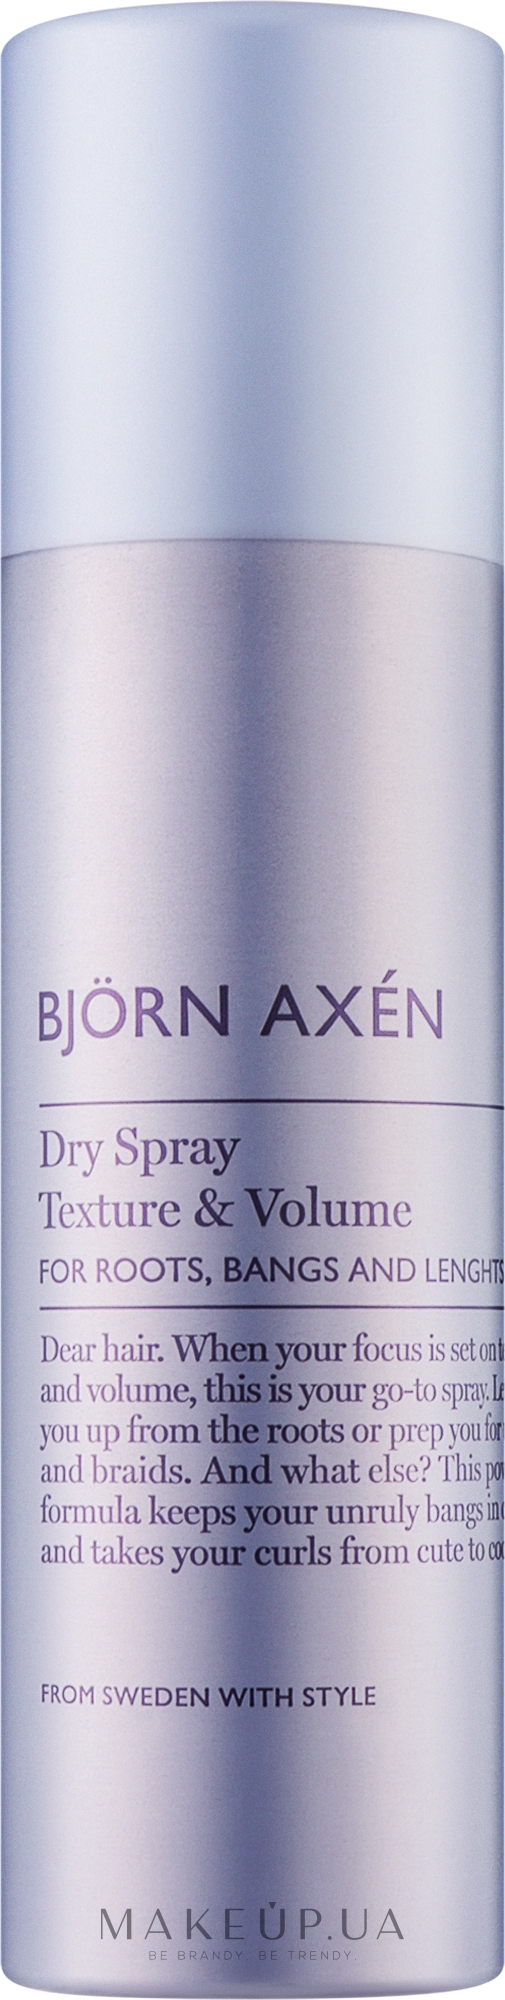 Сухой спрей для текстуры и объема волос - BjOrn AxEn Texture & Volume Dry Spray — фото 200ml